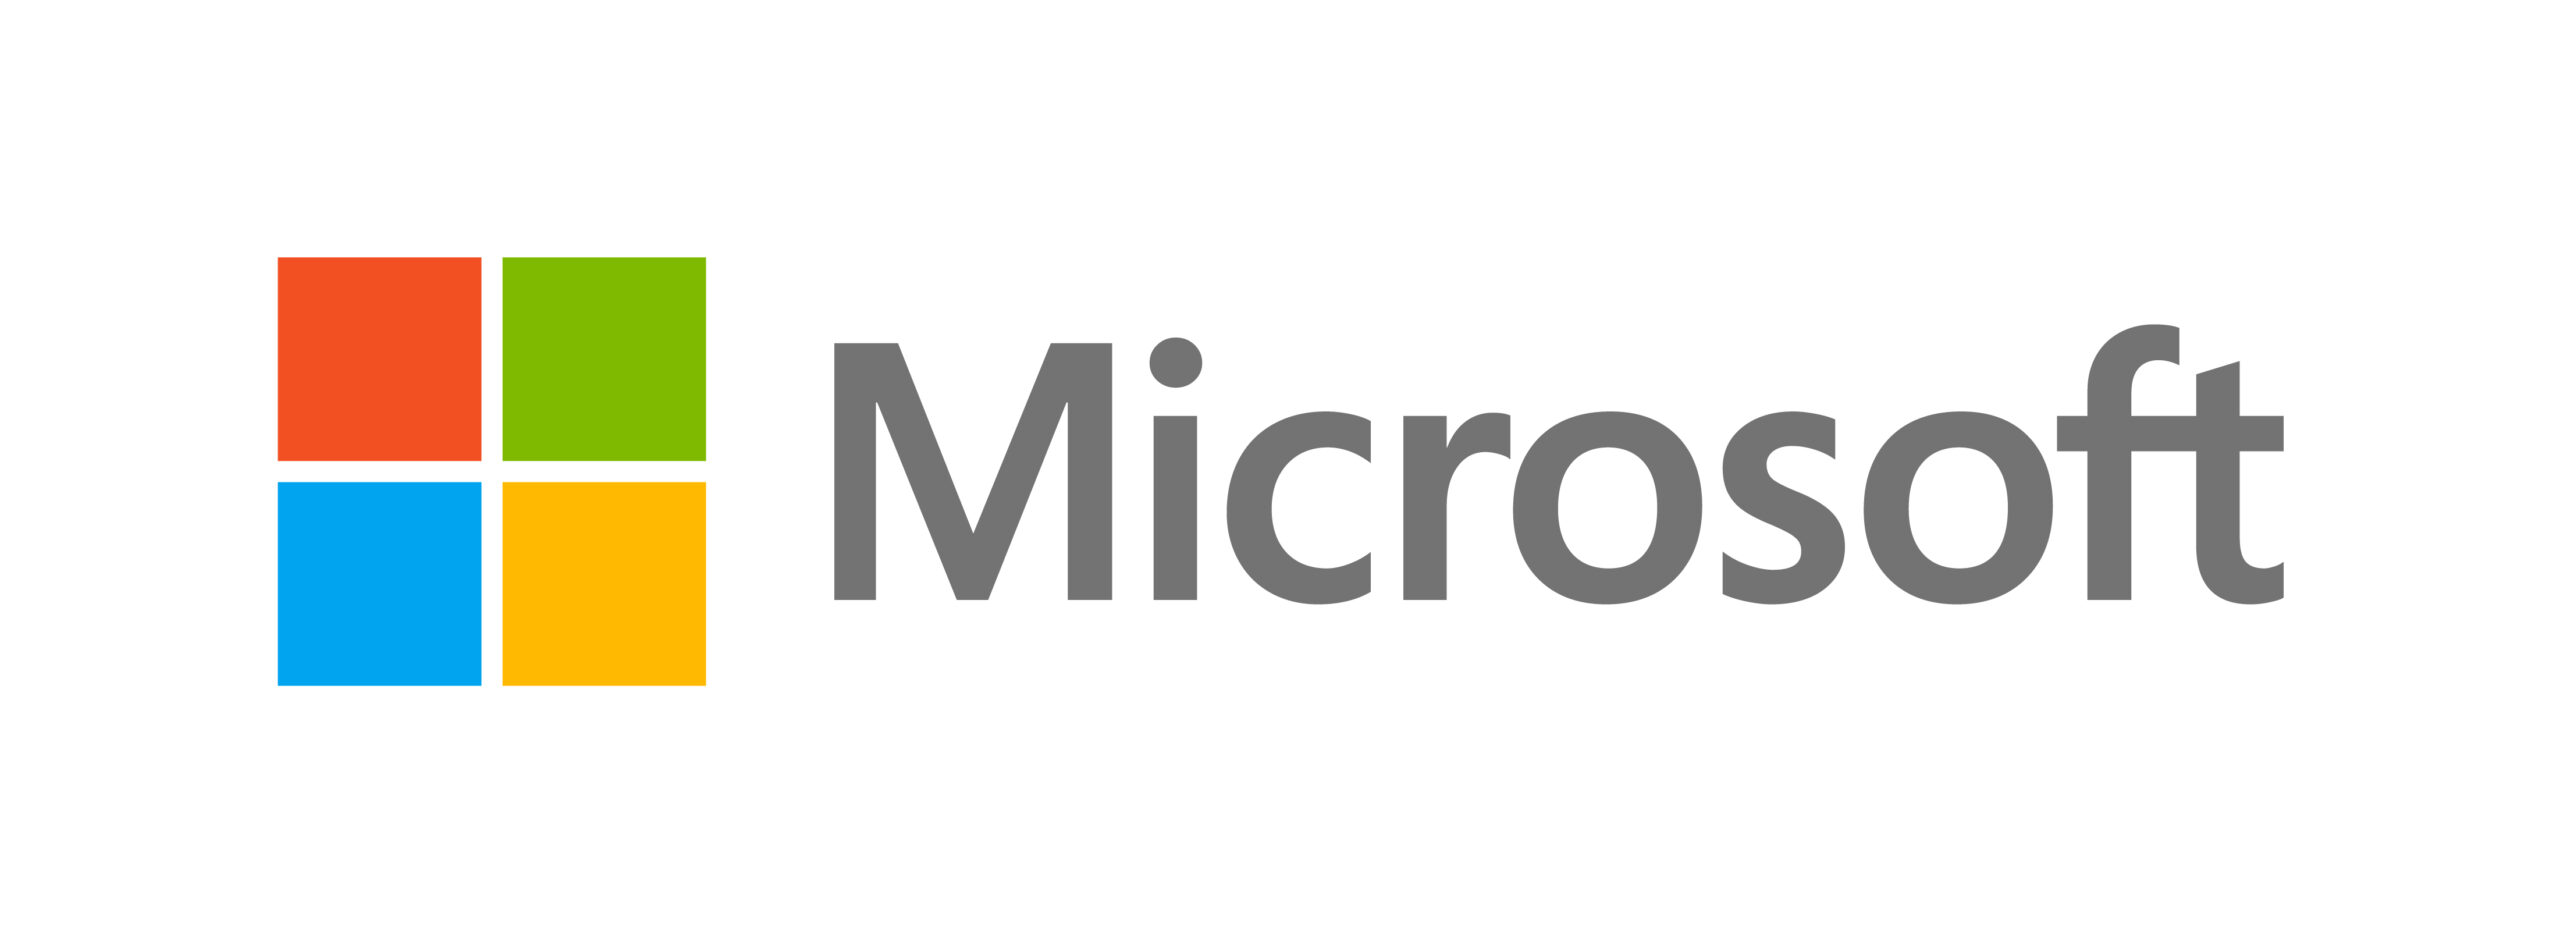 microsoft logo - companies attending